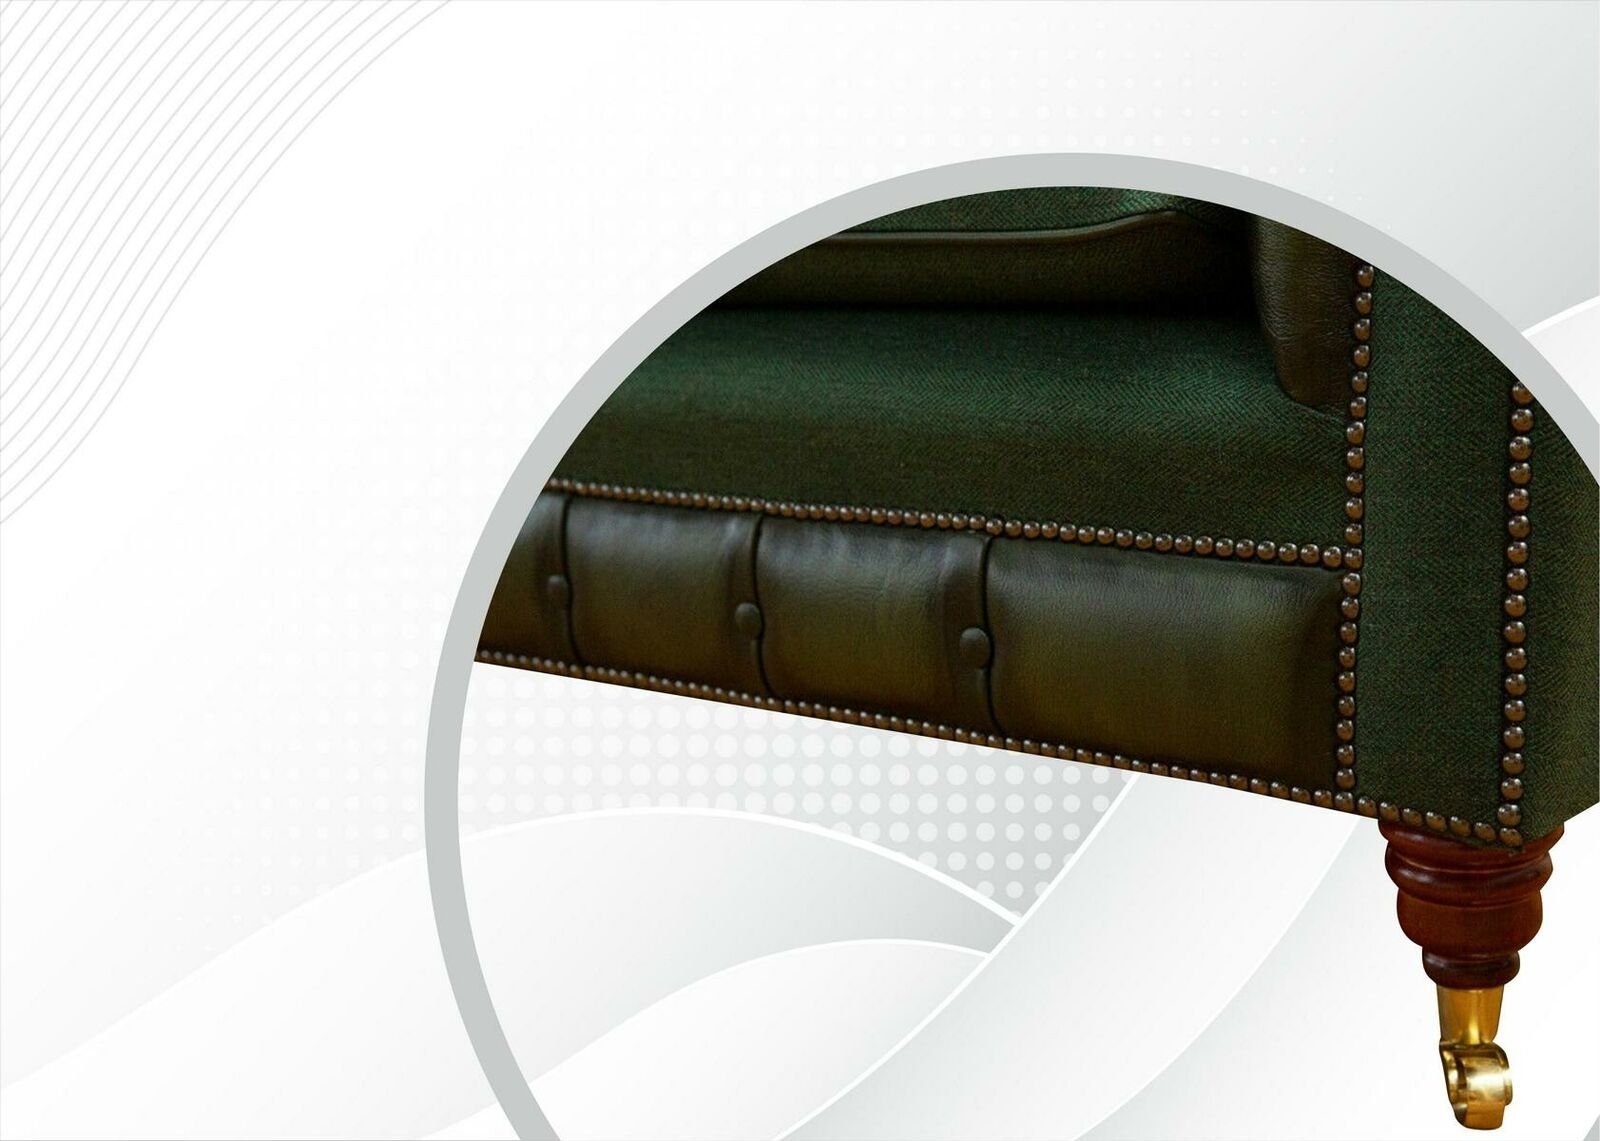 Europe 3-er Sofa Chesterfield-Sofa Modernes Neu, Couch Grüne in Chesterfield Made Luxus Design JVmoebel